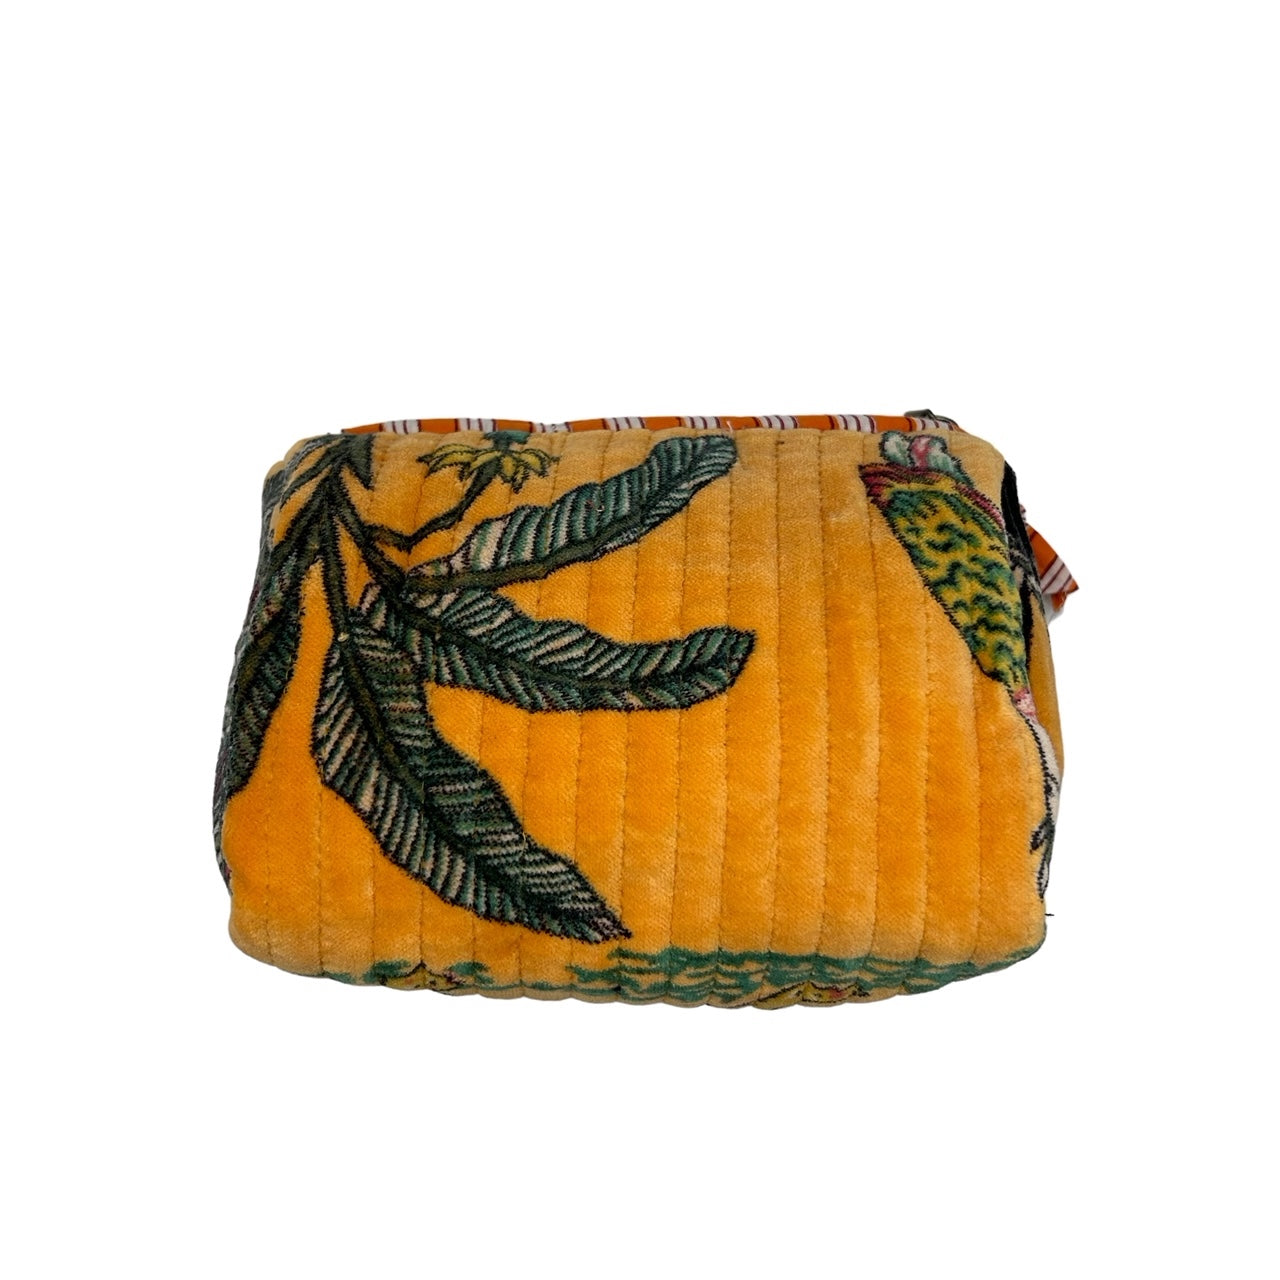 Madagascar velvet make-up bag in gold, large and small